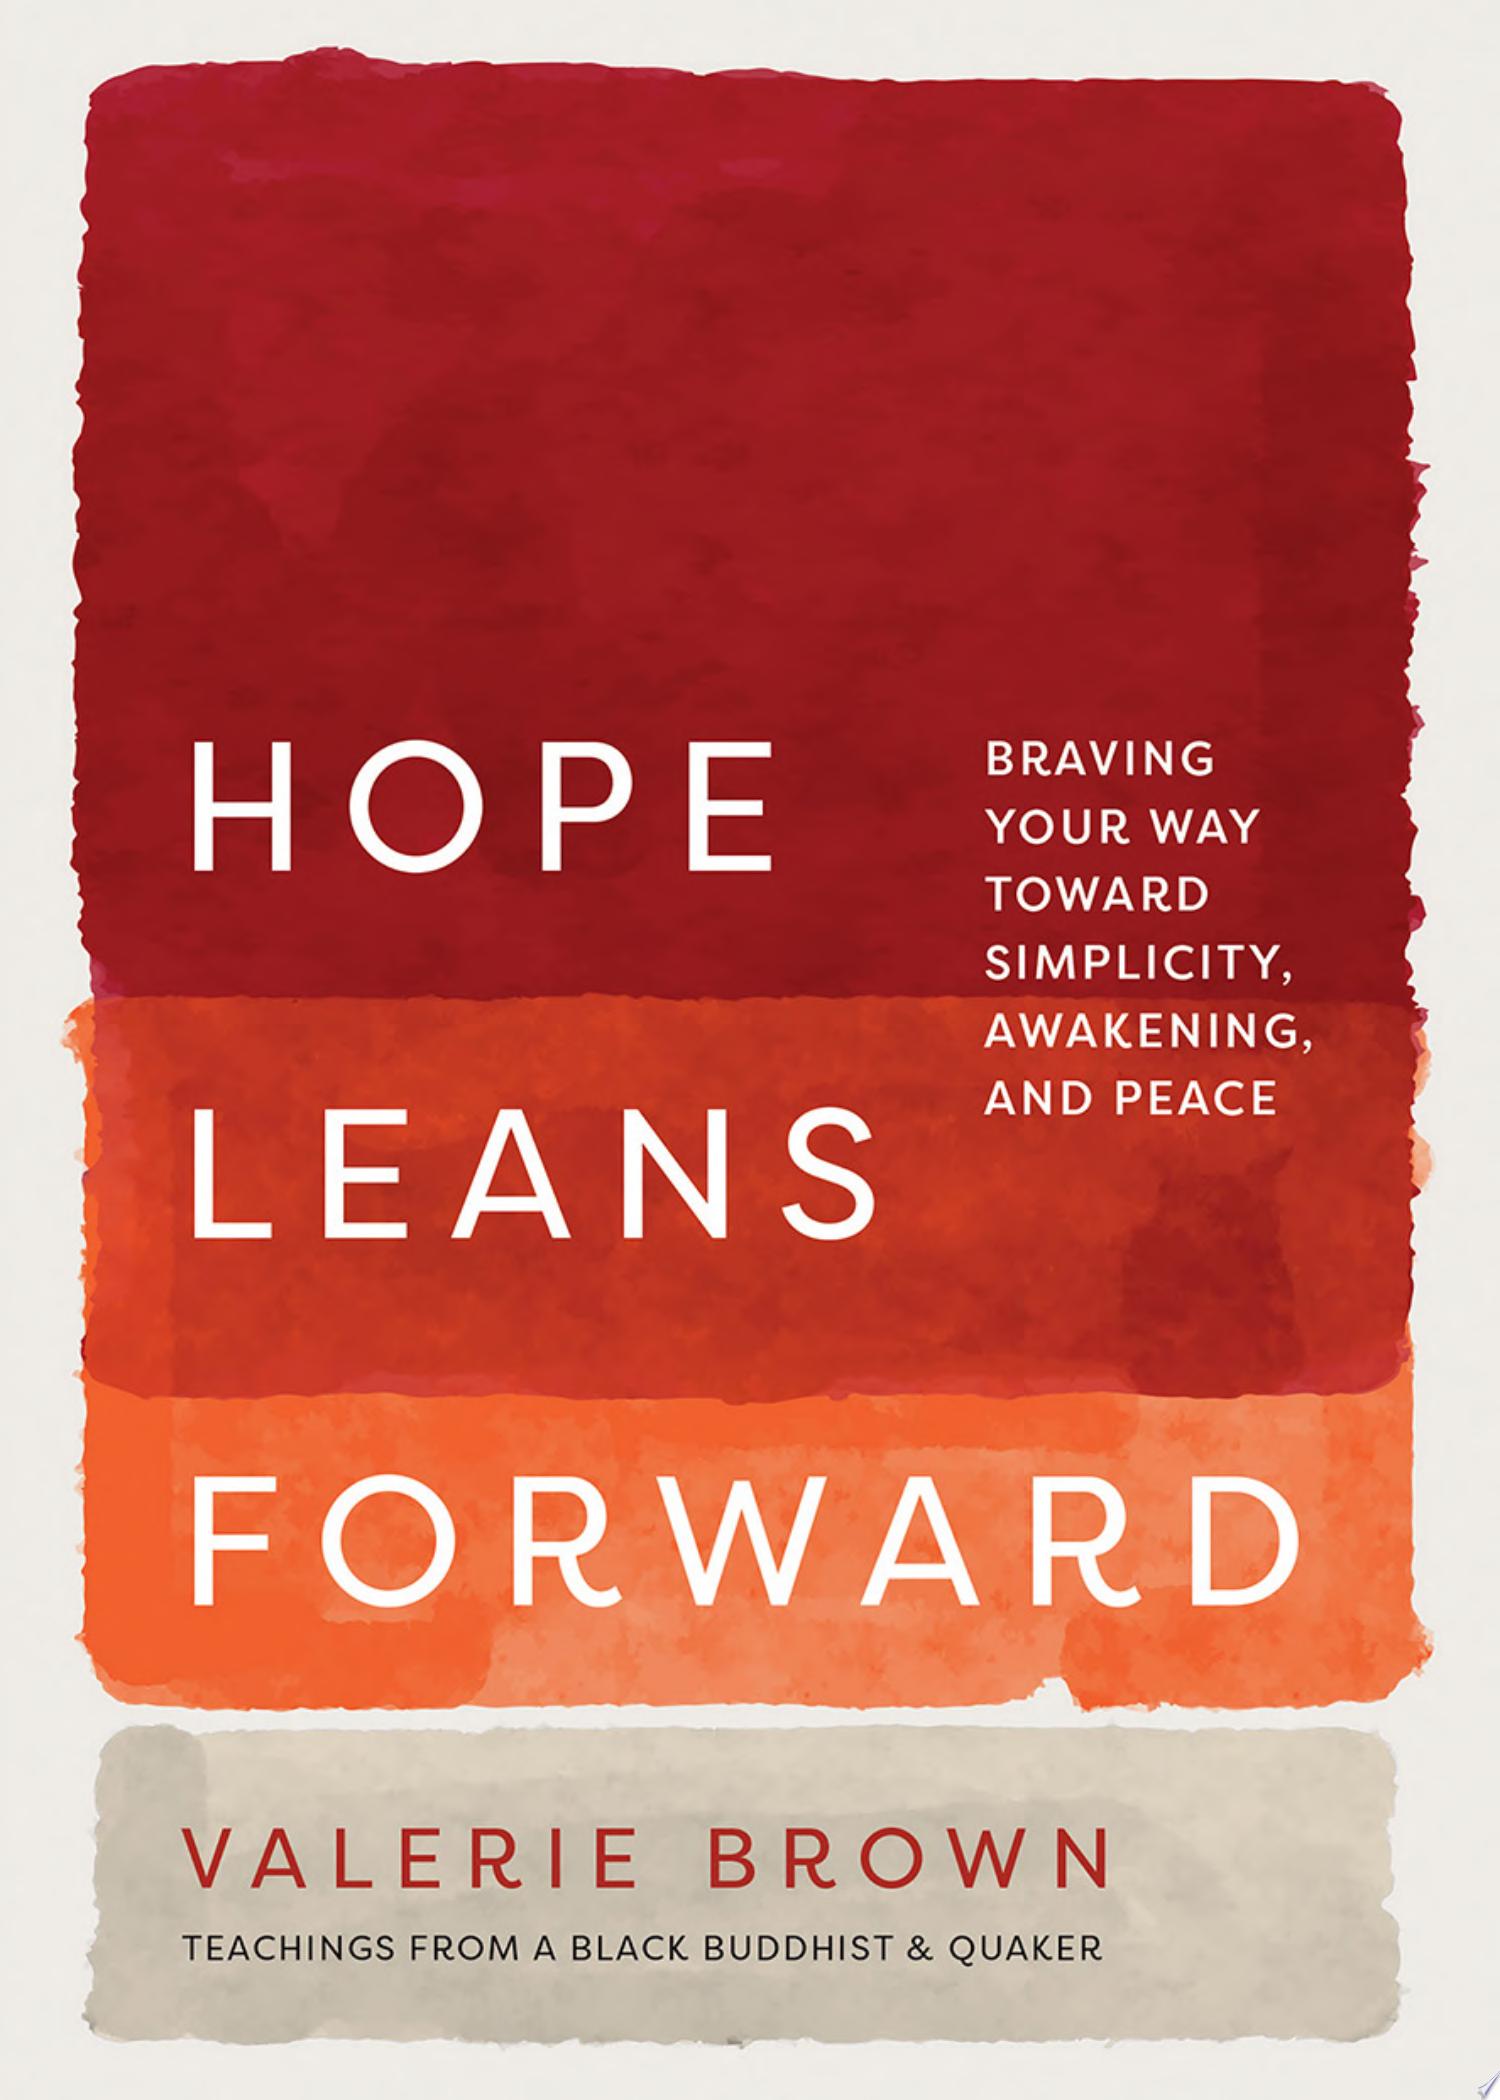 Image for "Hope Leans Forward"